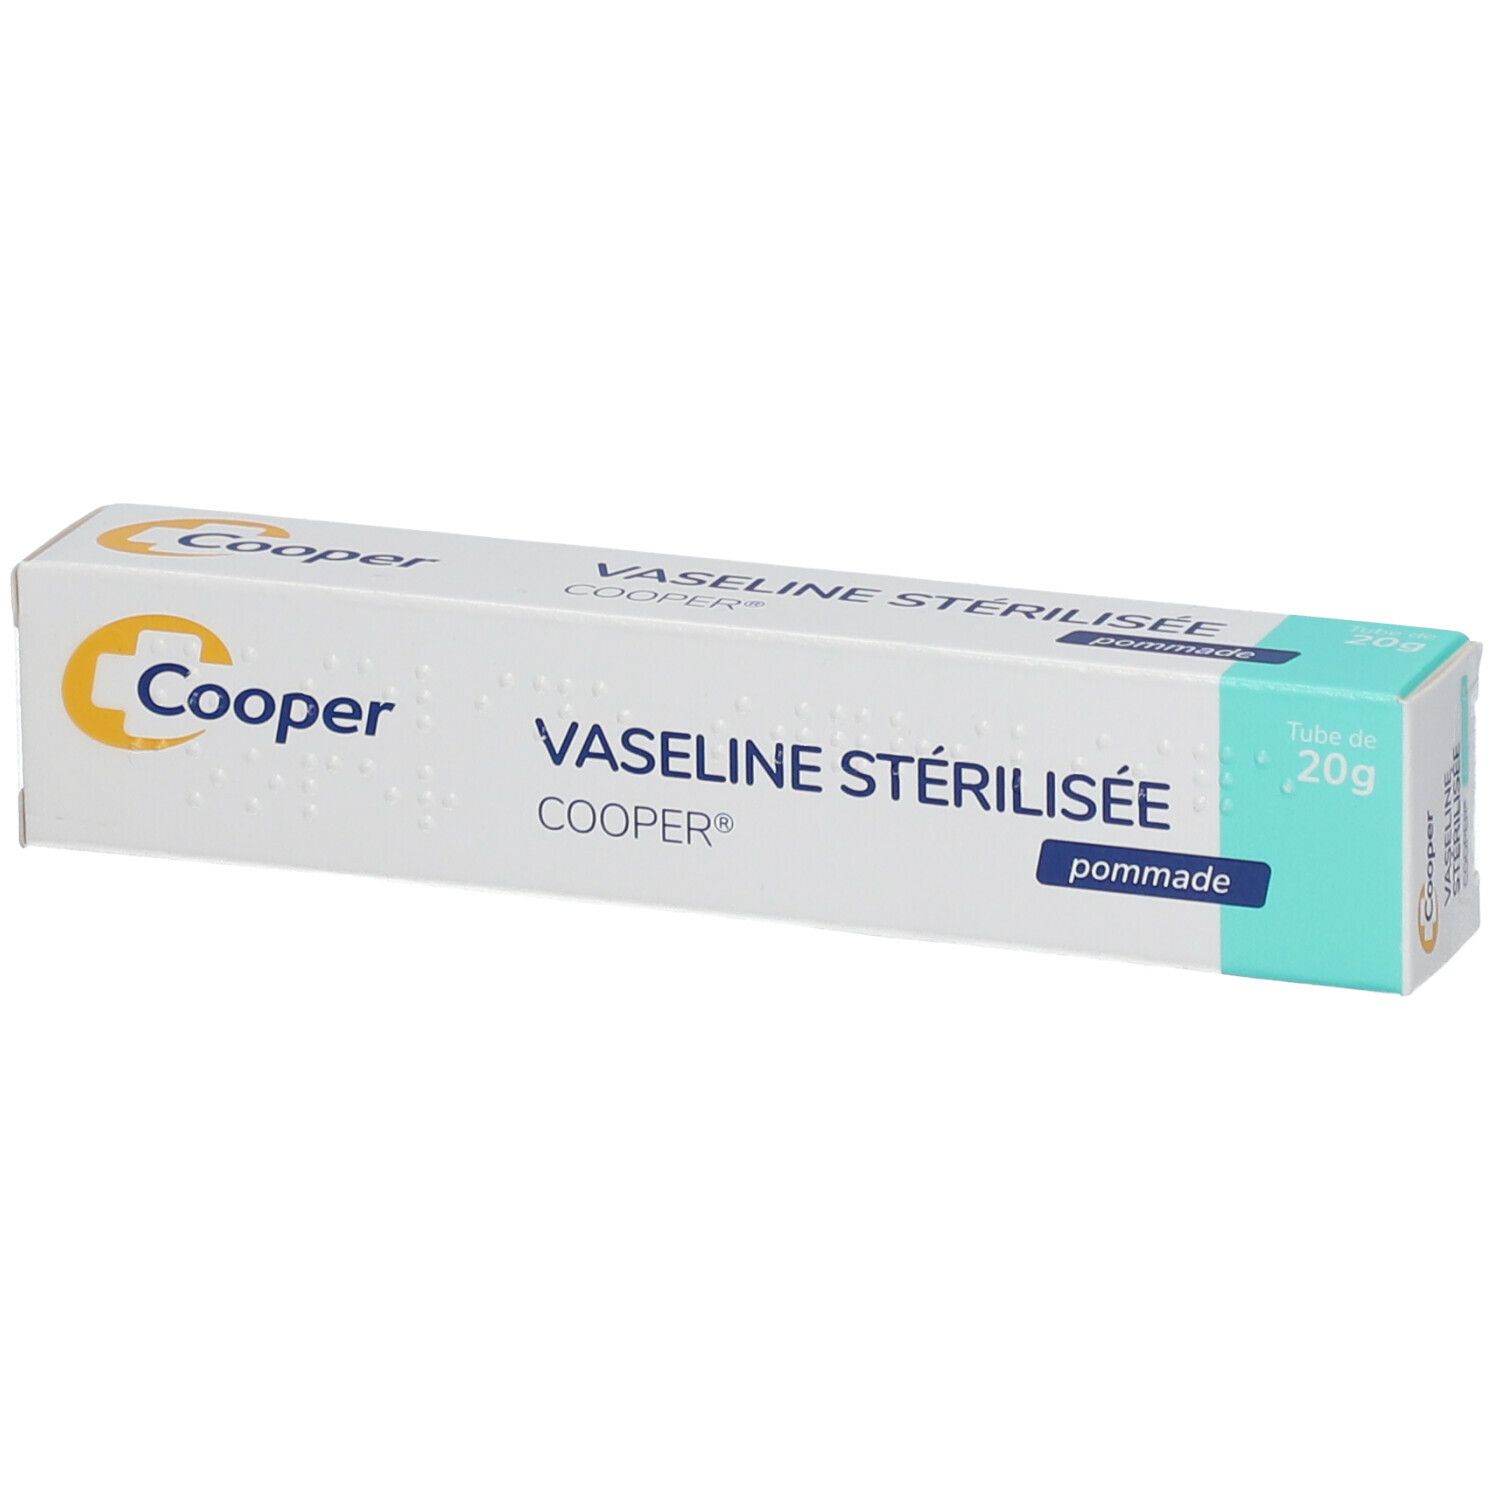 Cooper Vaseline Sterilisée